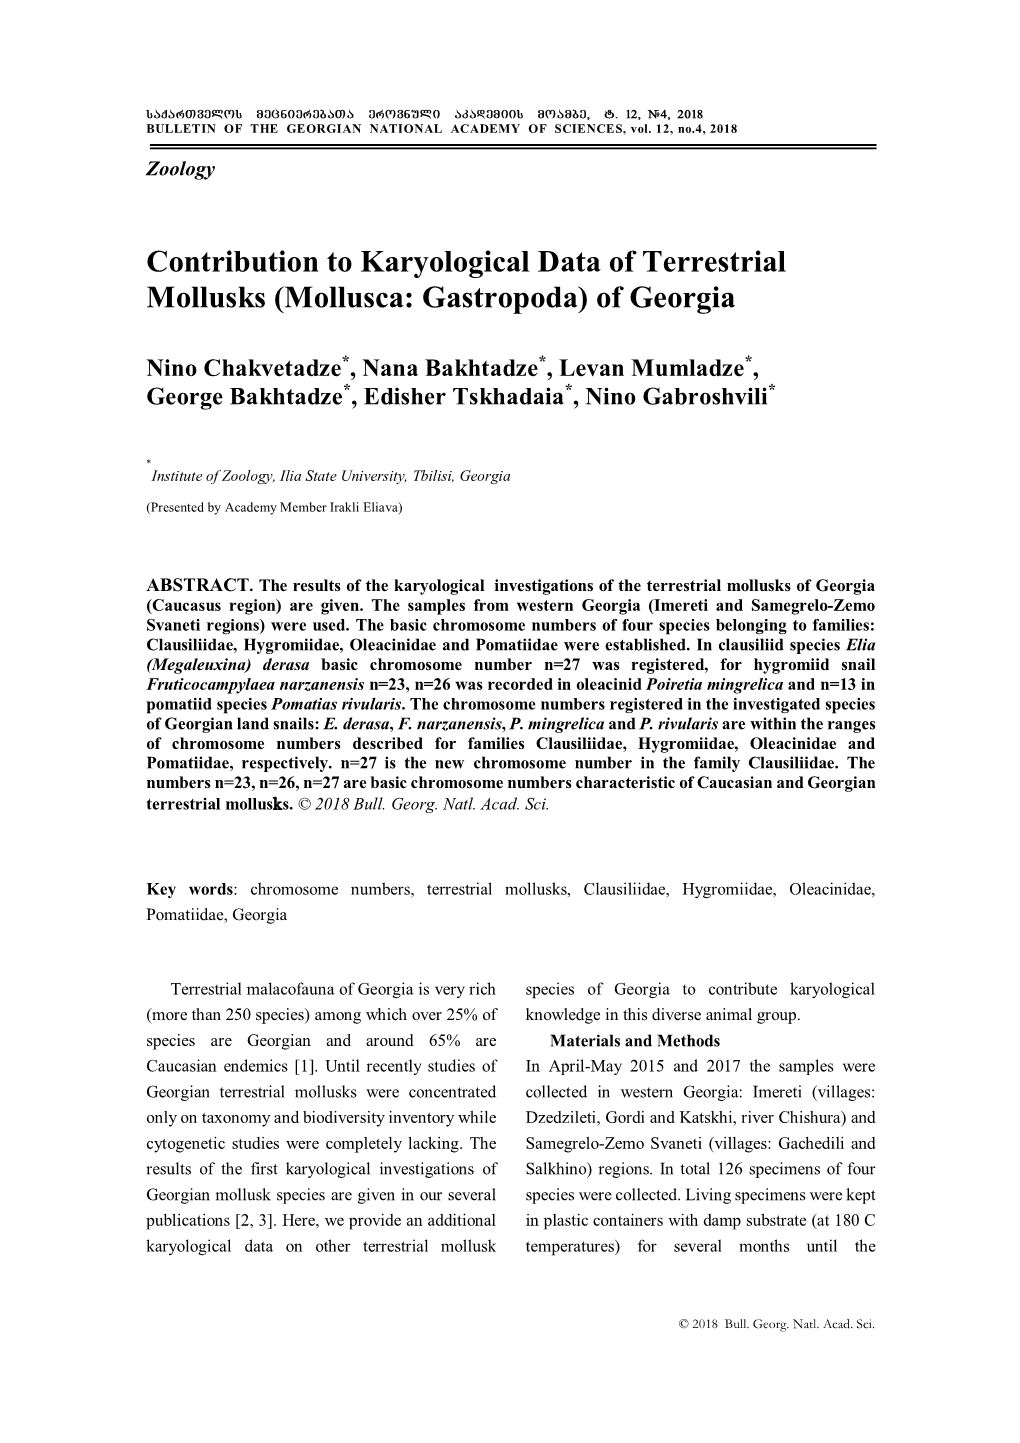 Contribution to Karyological Data of Terrestrial Mollusks (Mollusca: Gastropoda) of Georgia